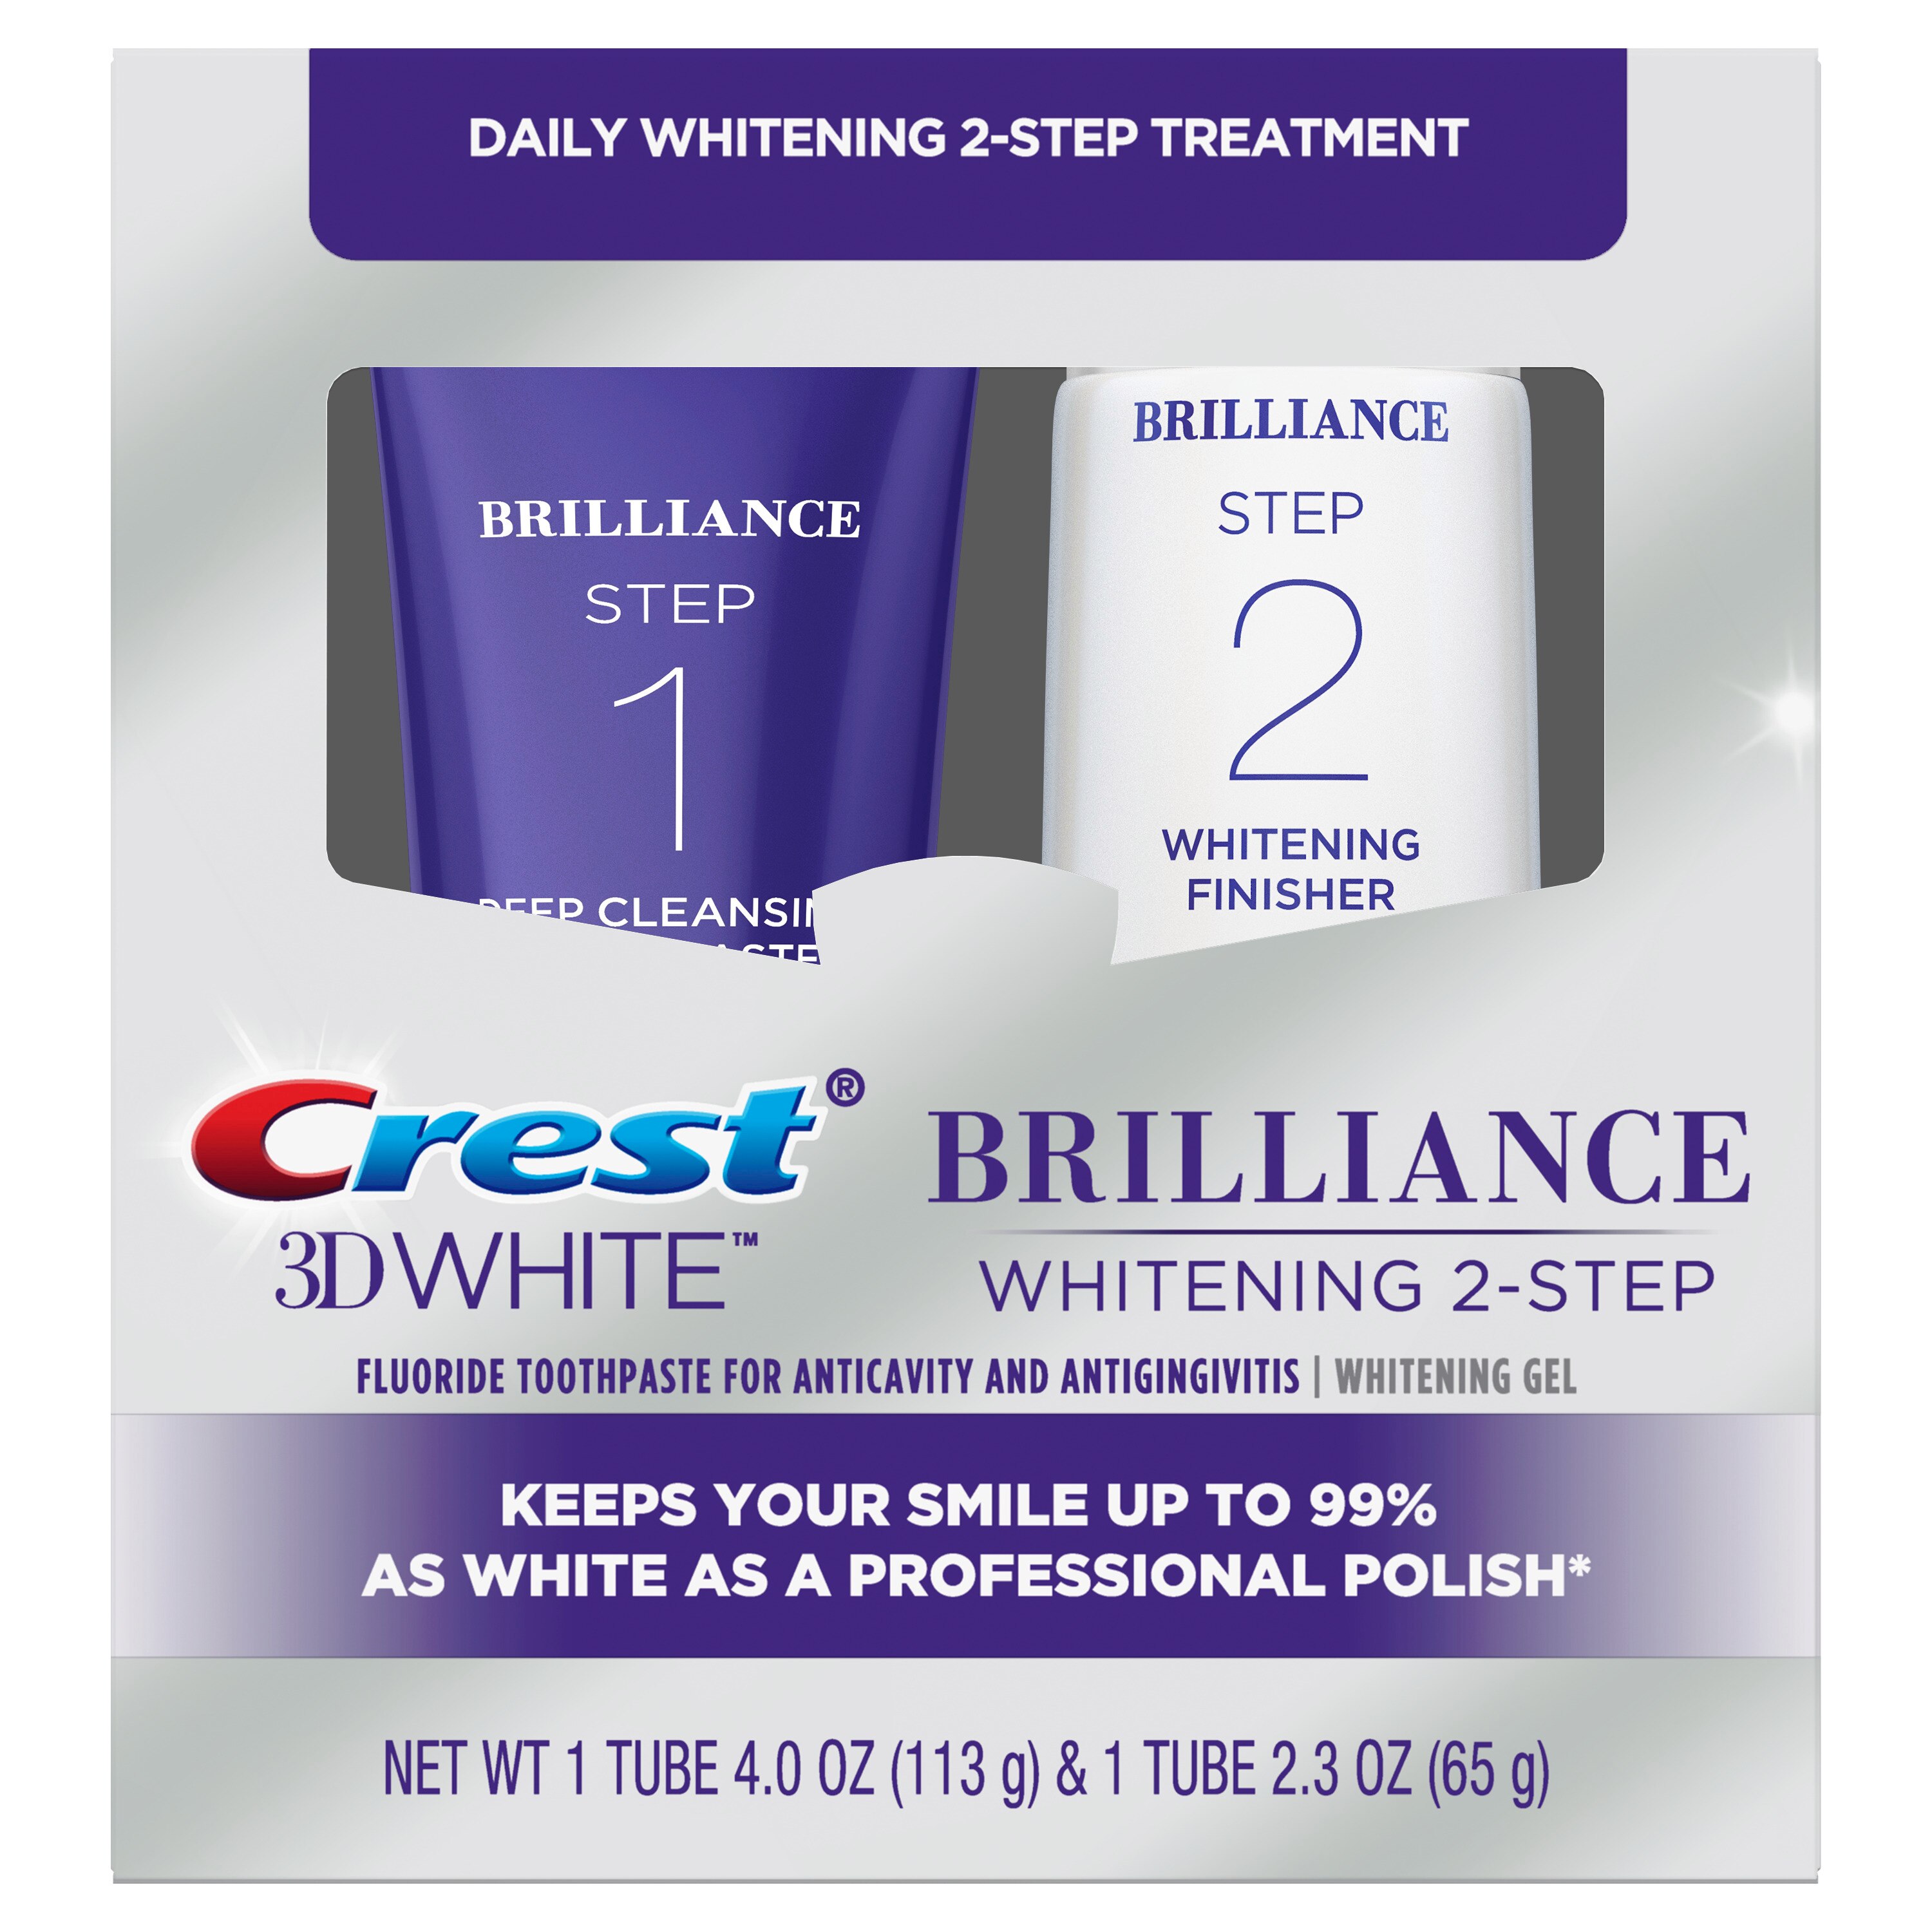 Crest 3D White Brilliance Daily Whitening 2-Step Treatment